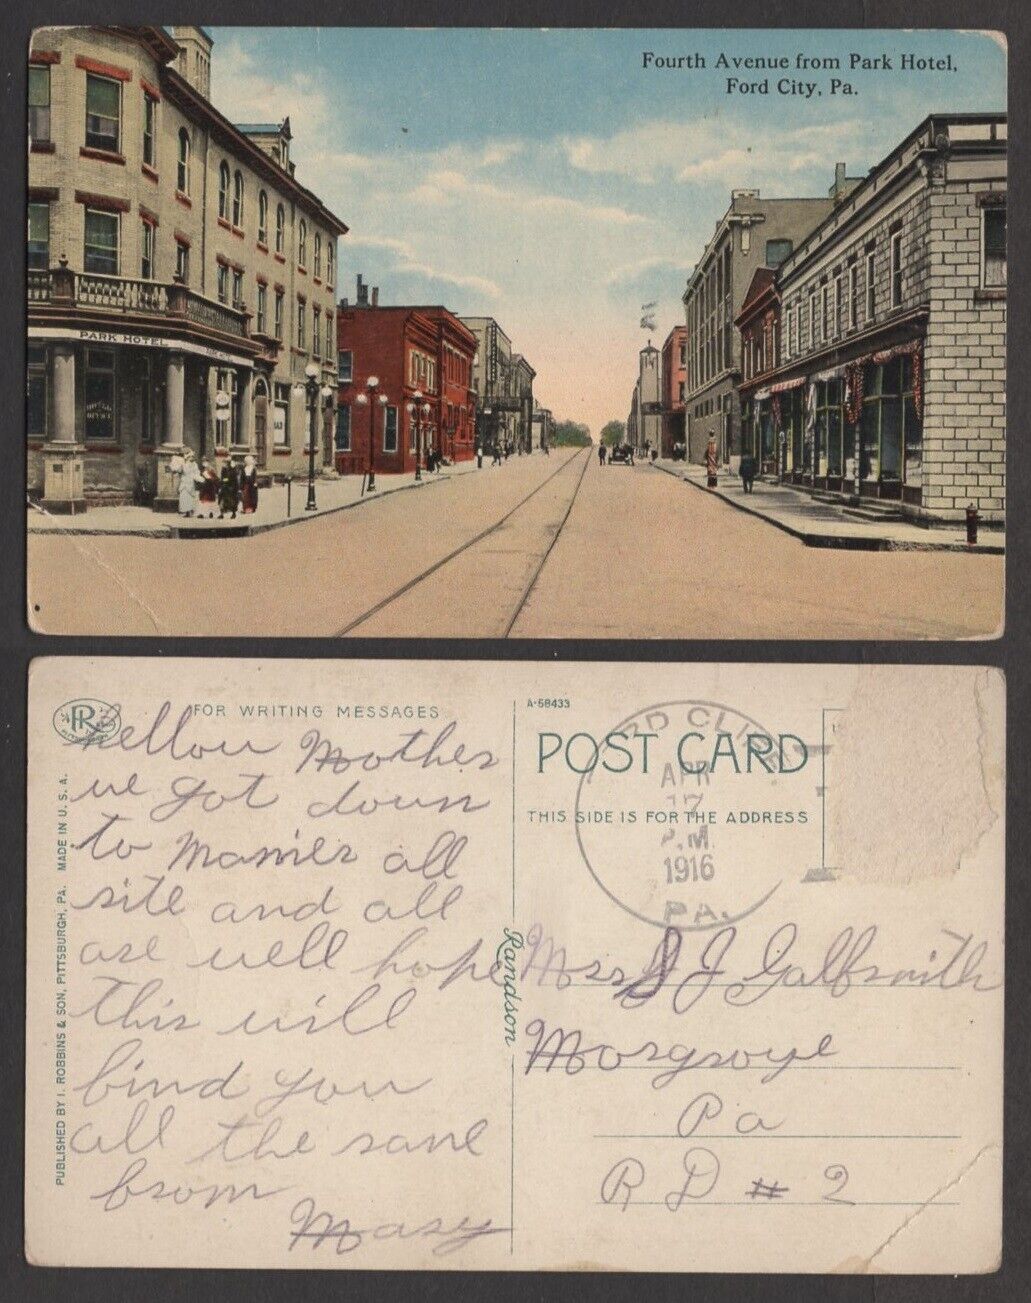 1916 Pennsylvania Postcard - Ford City - Fourth Avenue Street Scene